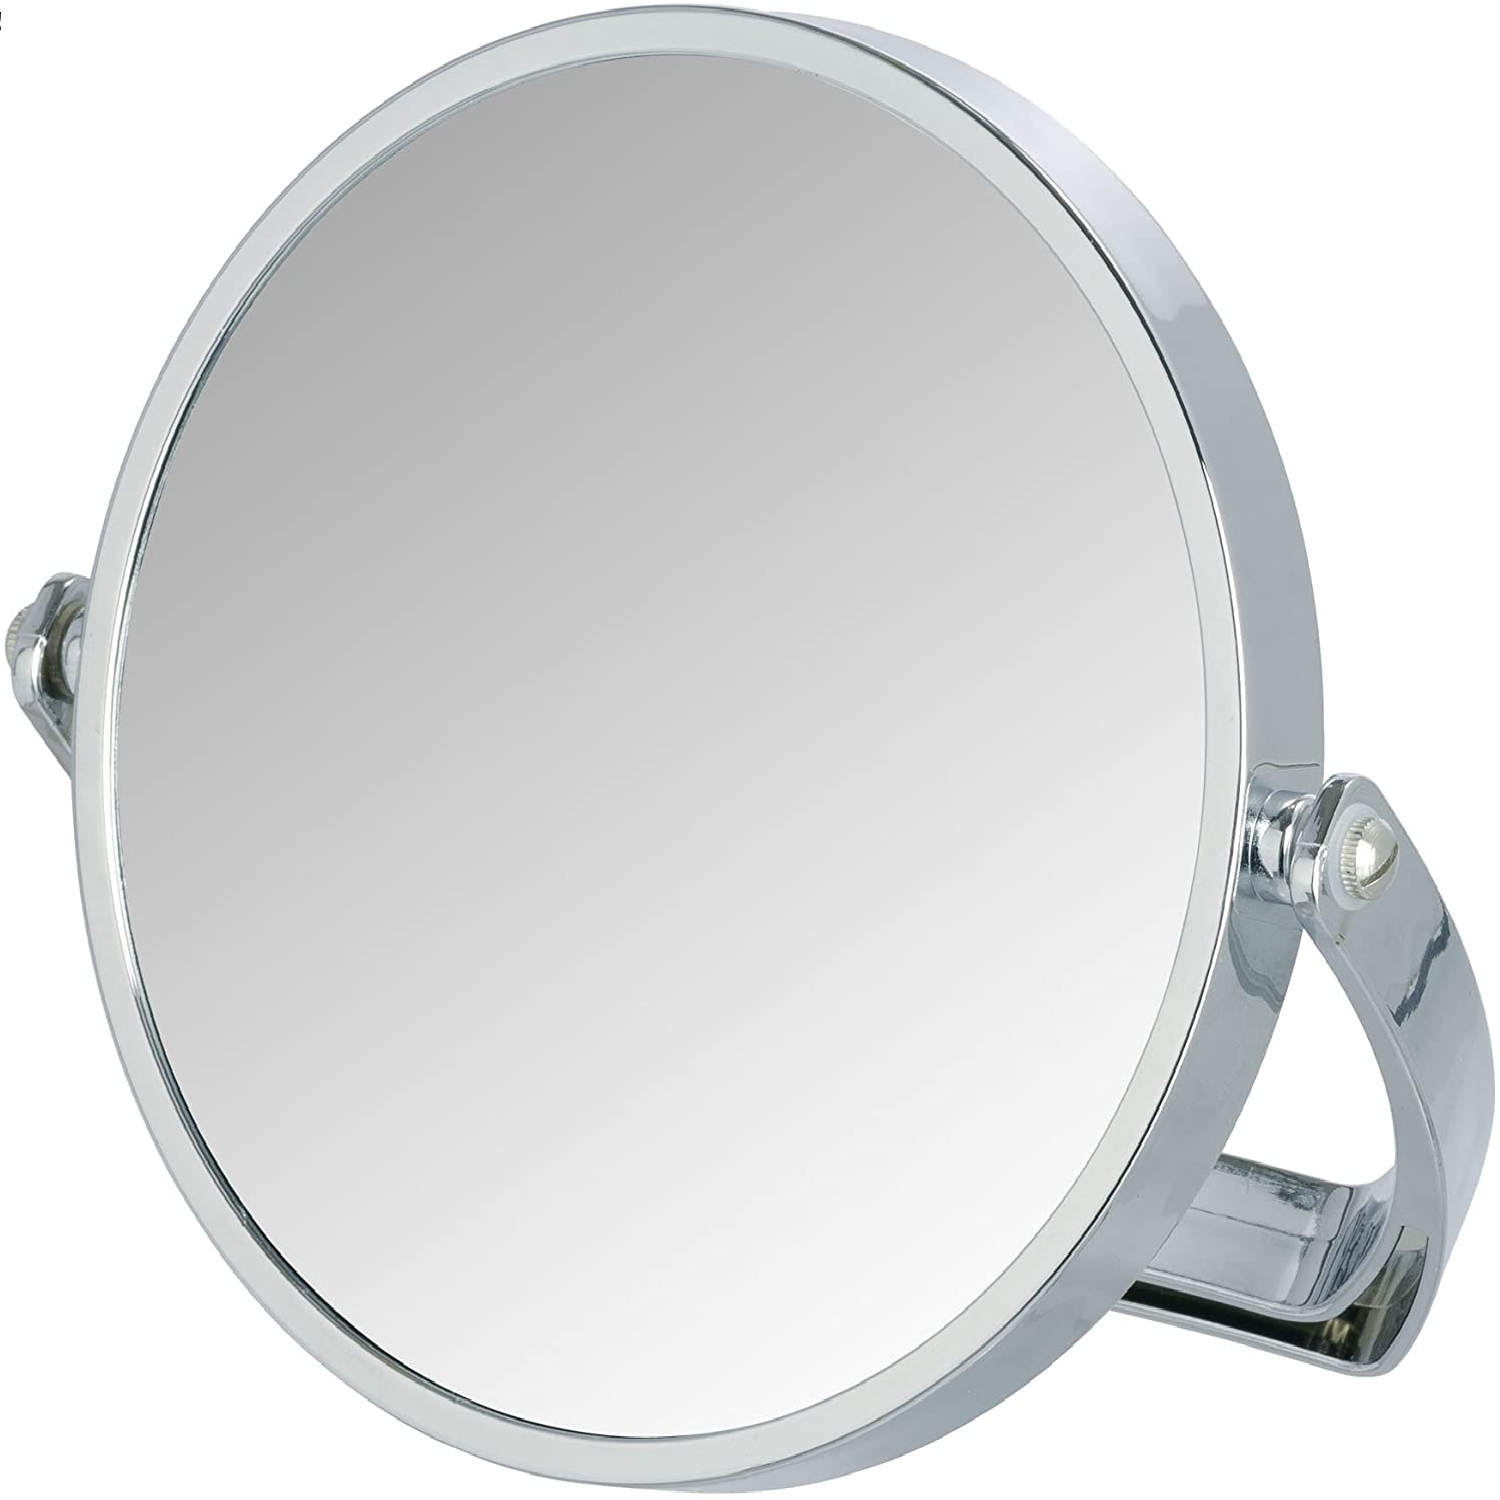 Kosmetikspiegel Noale Chrom - neigbar, Spiegelfläche ø 15 cm 500 % Vergrößerung, Kunststoff, 19.5 x 19 x 2 cm, Chrom